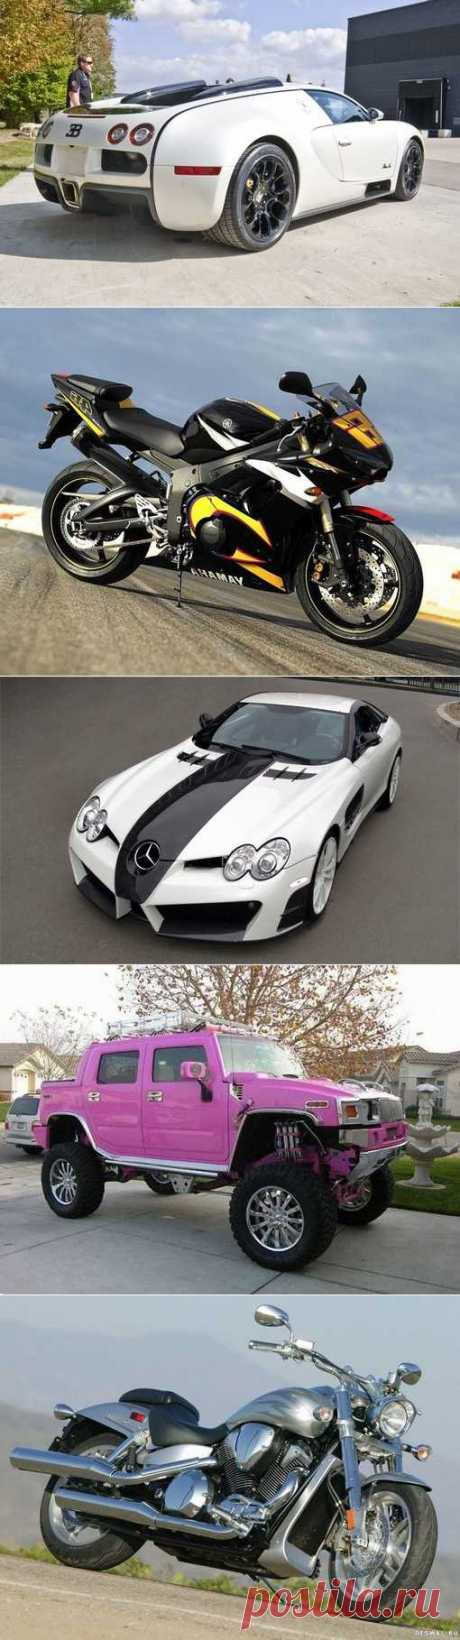 Maserati, Bristol, Cadillac, Spyker, Иж. (1/1) - Авто форум - Auto